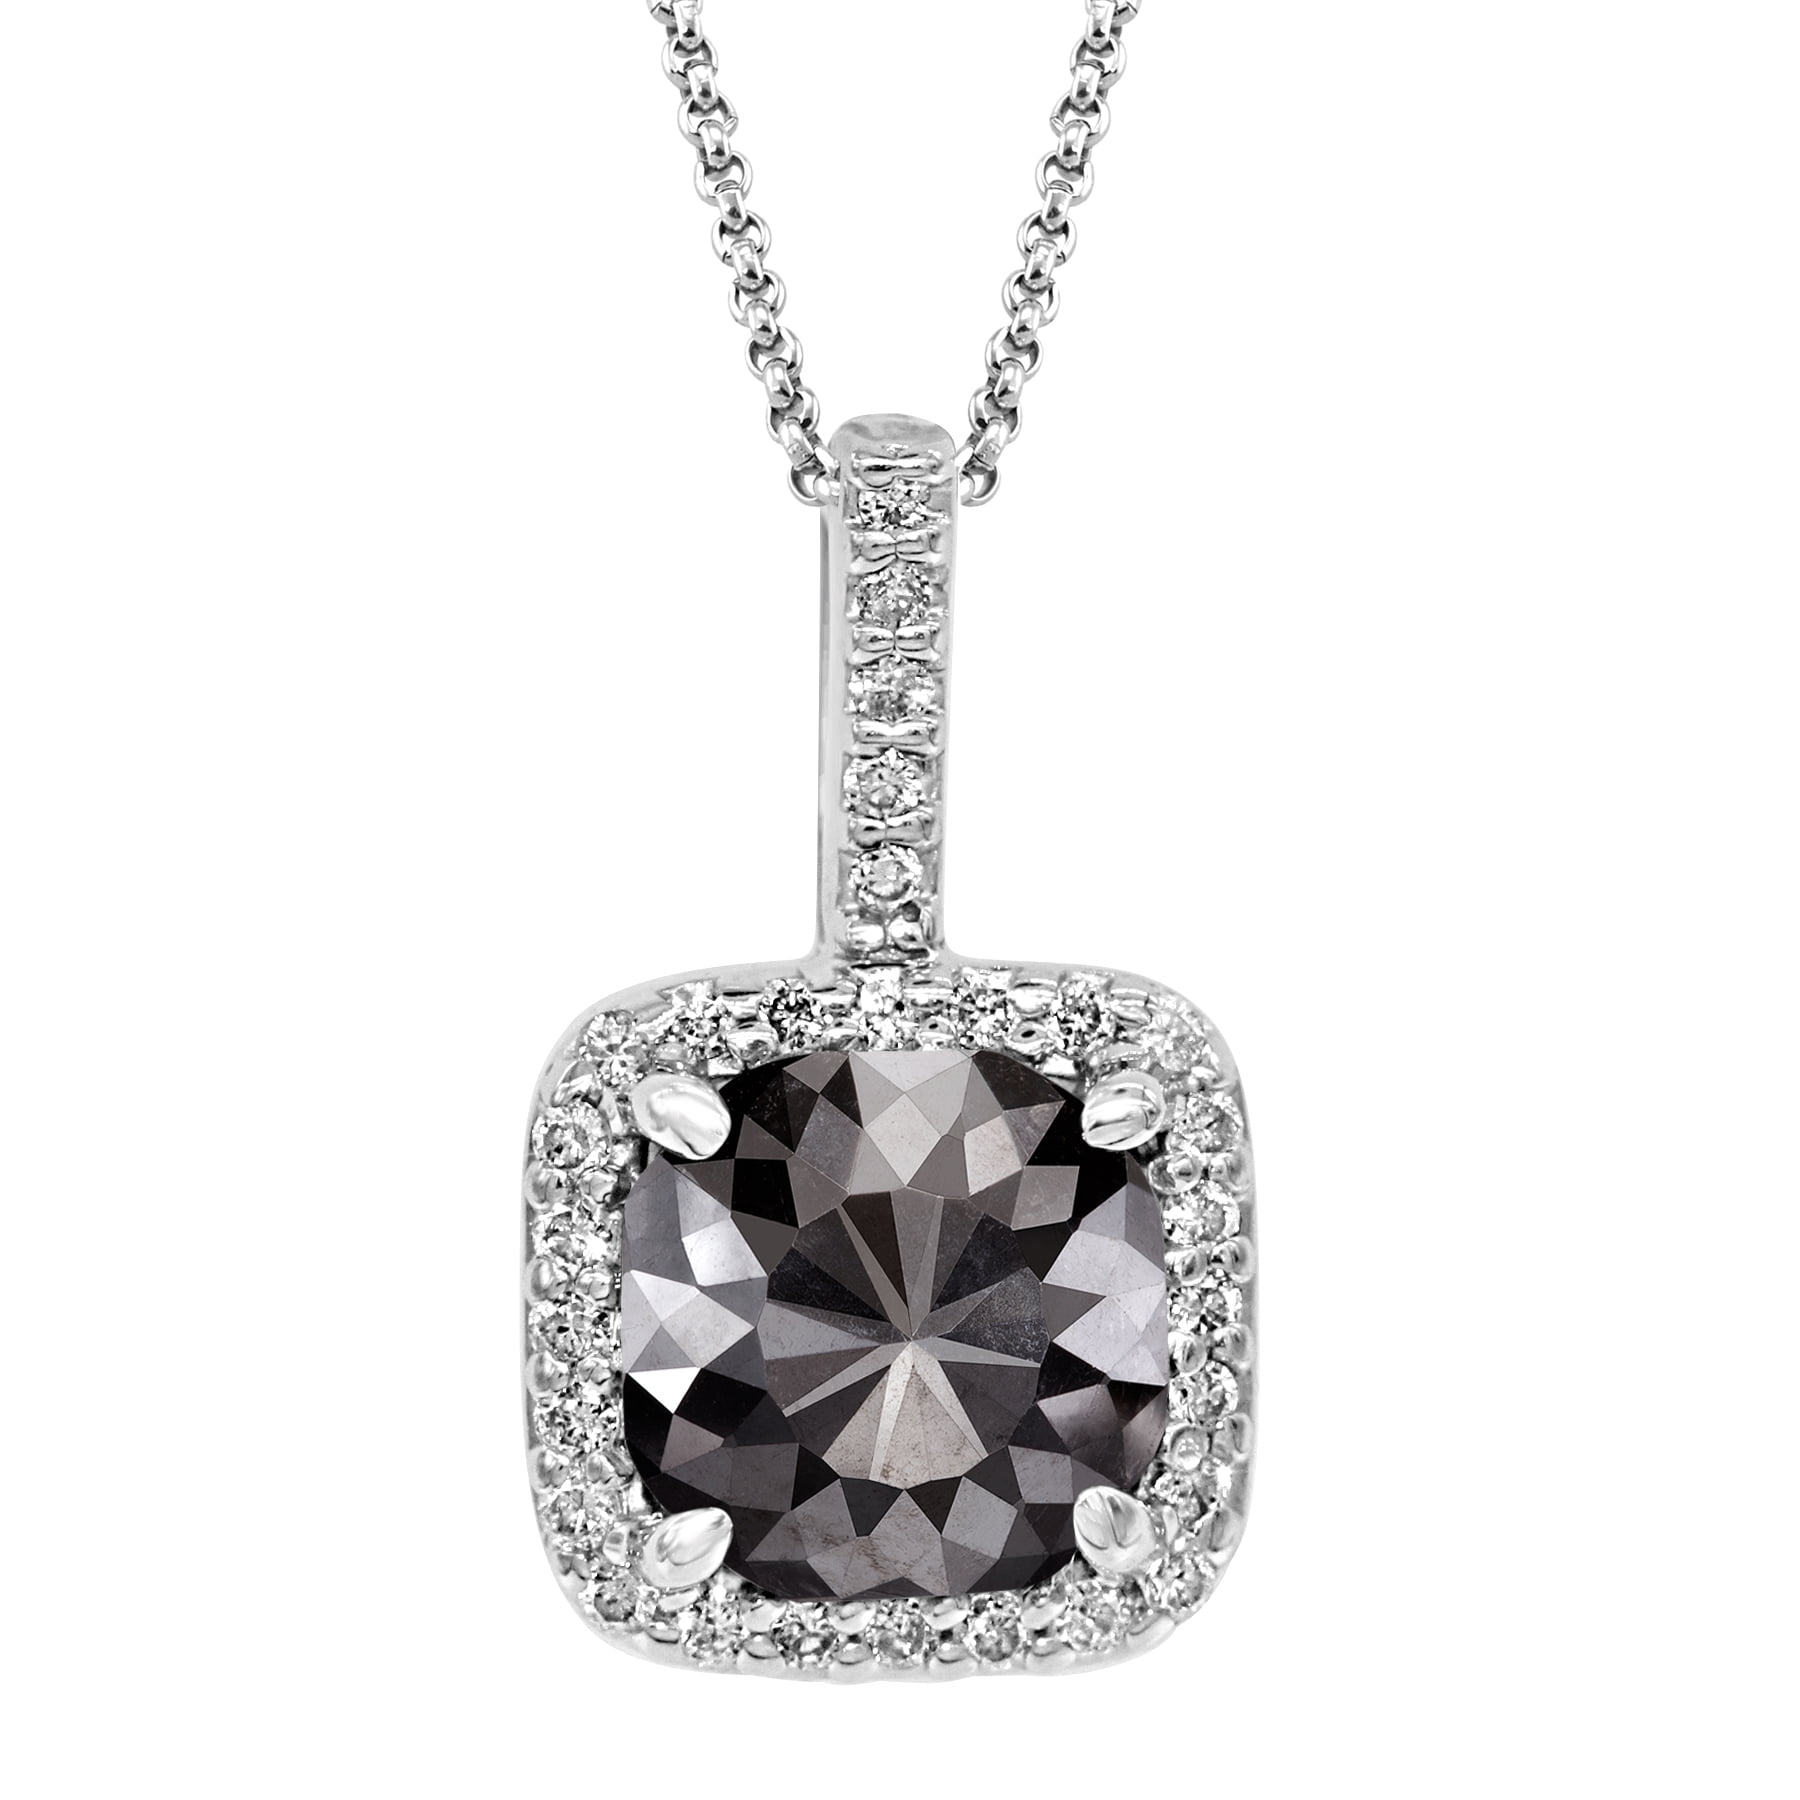 White Fire Opal & Diamonds 2.60Ct 14k White Gold Over Pendant 18"Chain Necklace